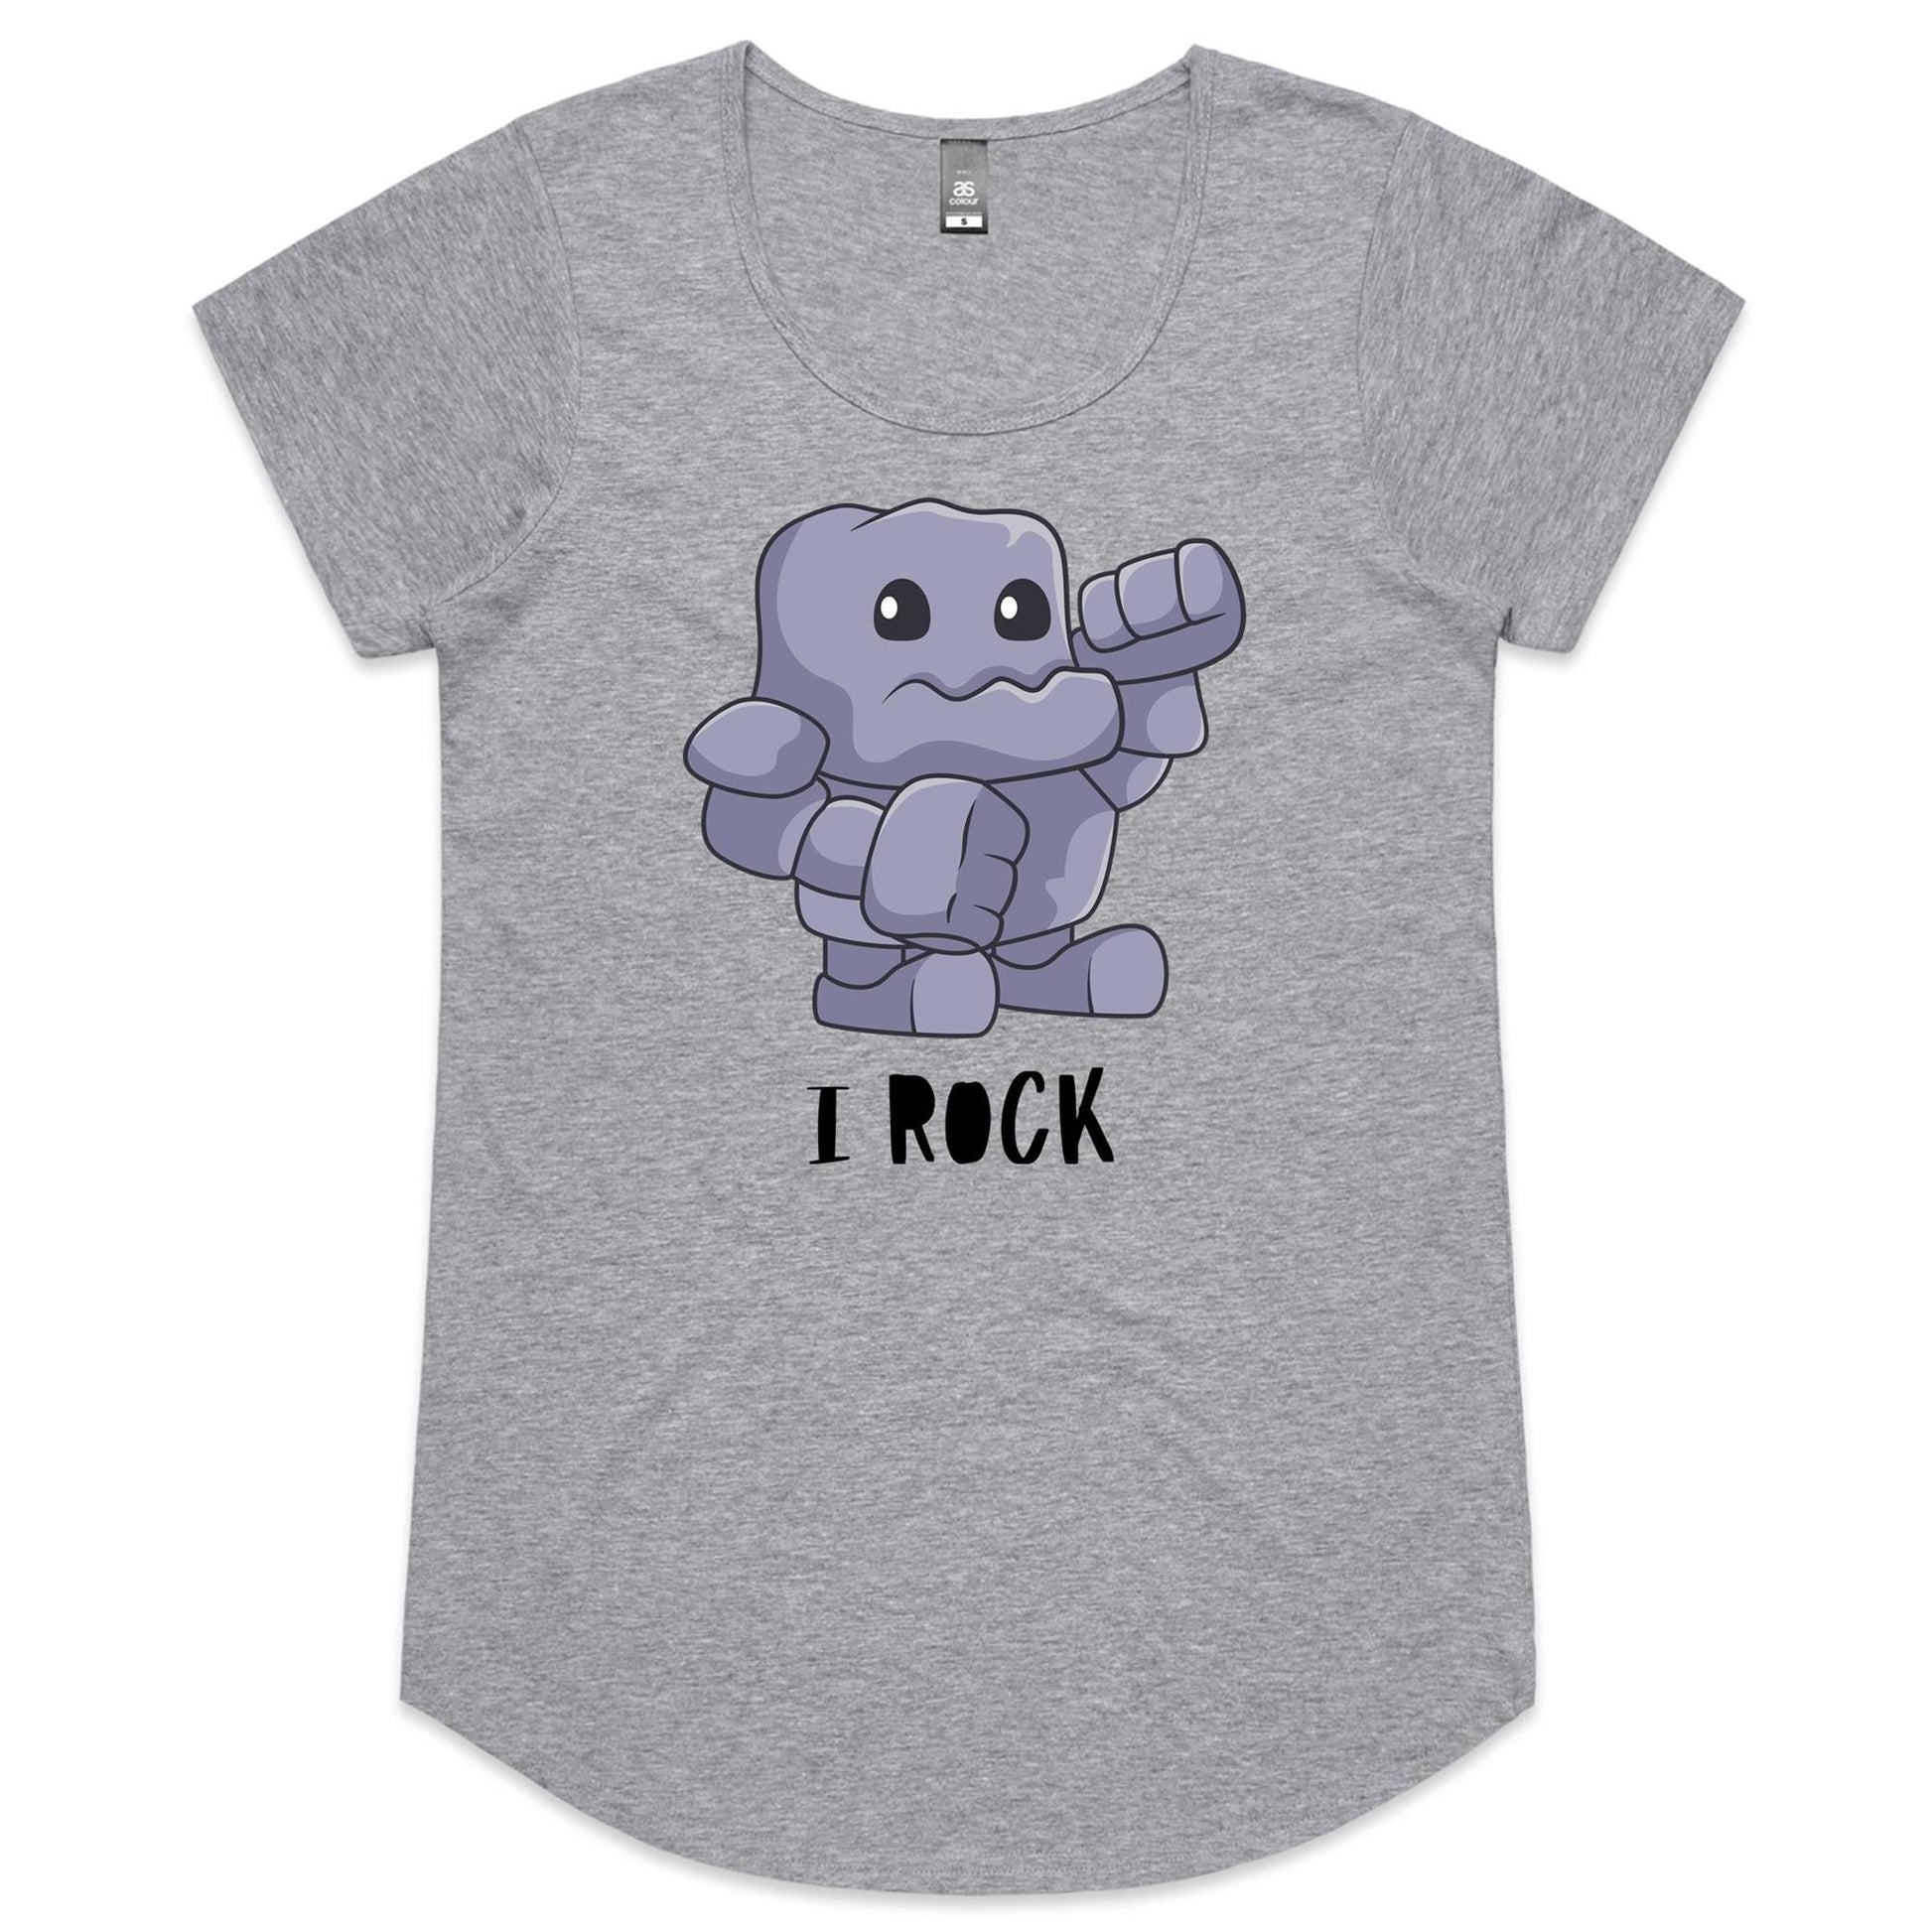 I Rock - Womens Scoop Neck T-Shirt Grey Marle Womens Scoop Neck T-shirt Music